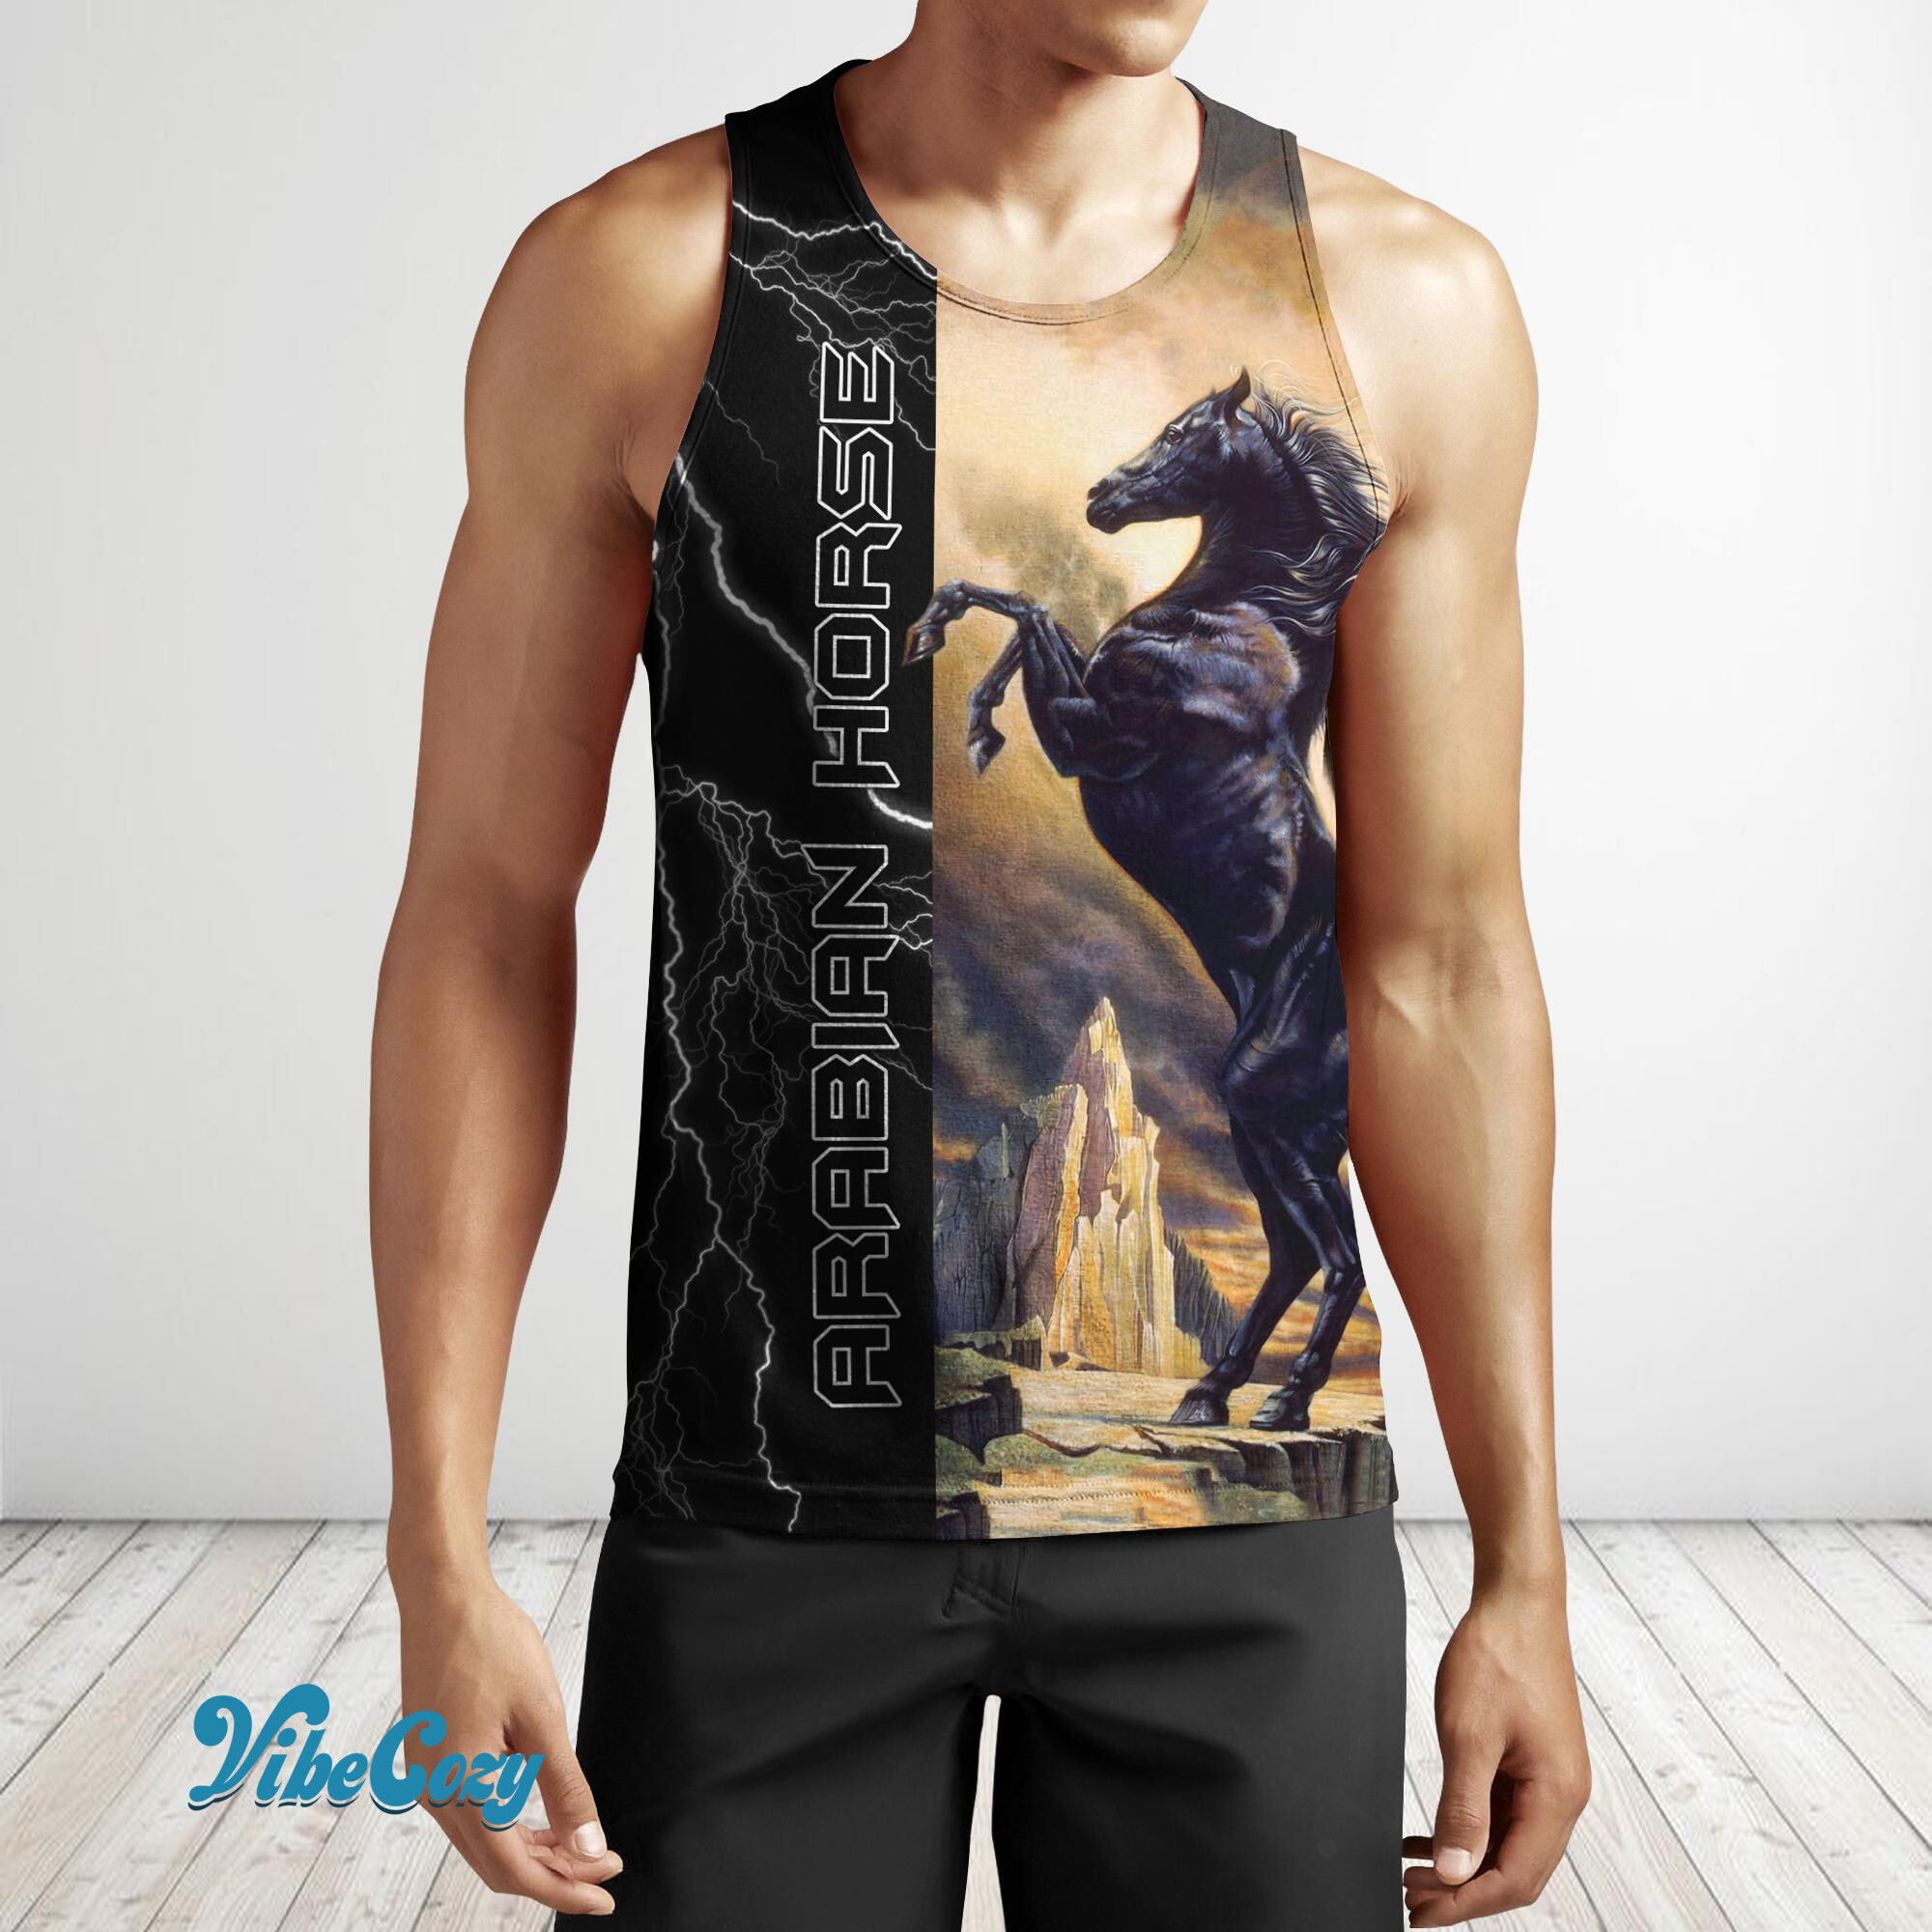 Black Stallion Arabian Horse 3D All Over Printed Shirt Hoodie Pi301202-MP